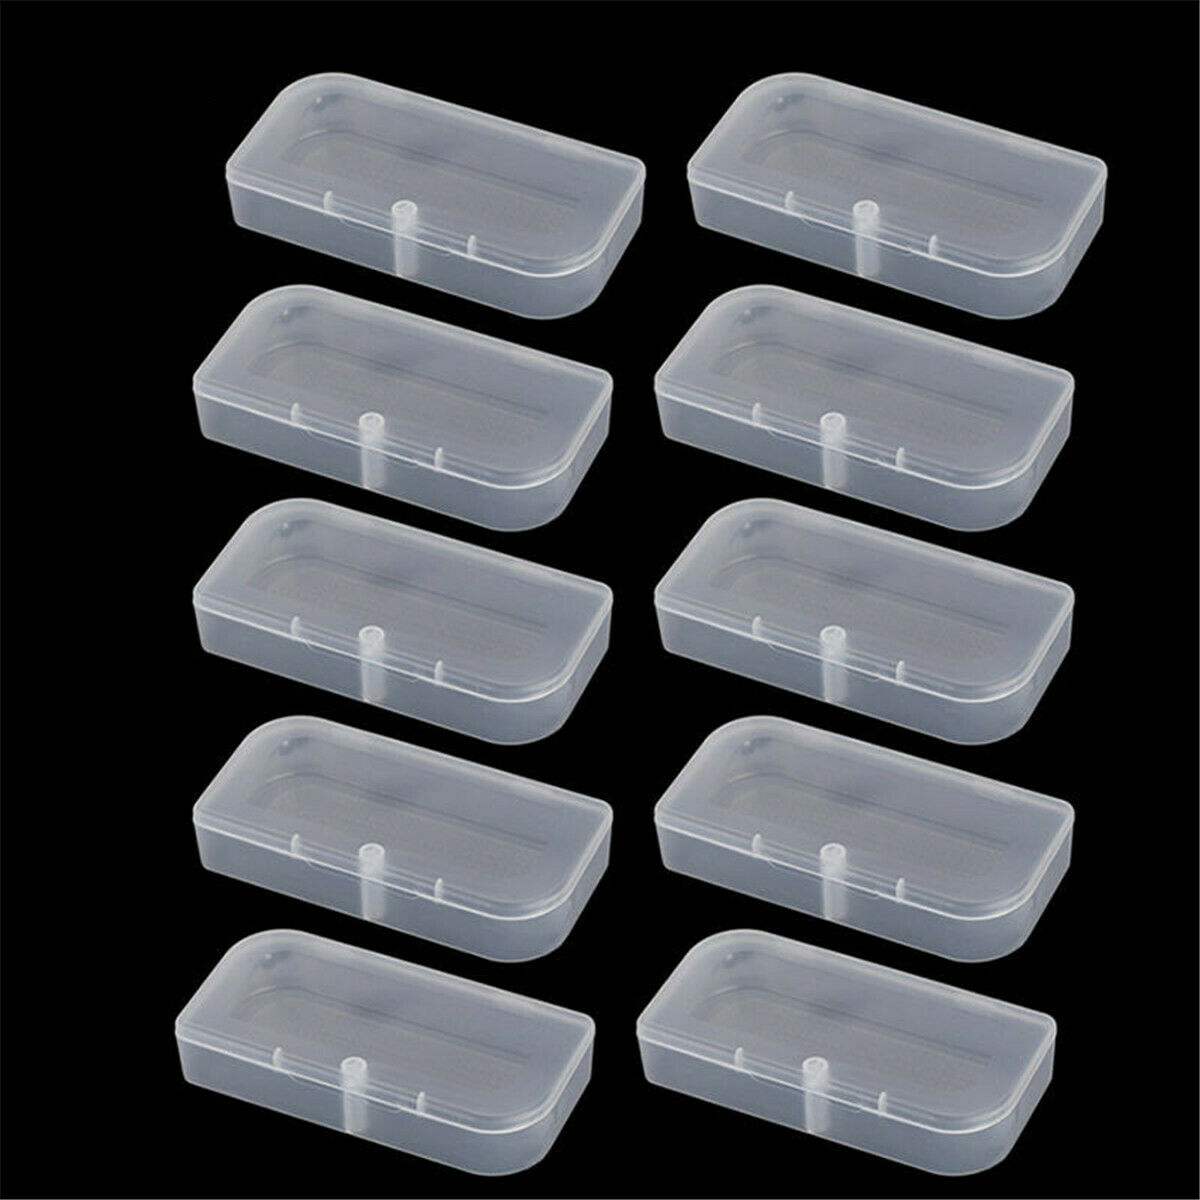 10x Clear Plastic Storage Box Jewelry Earplug Case Container Bead Organizer DIY 